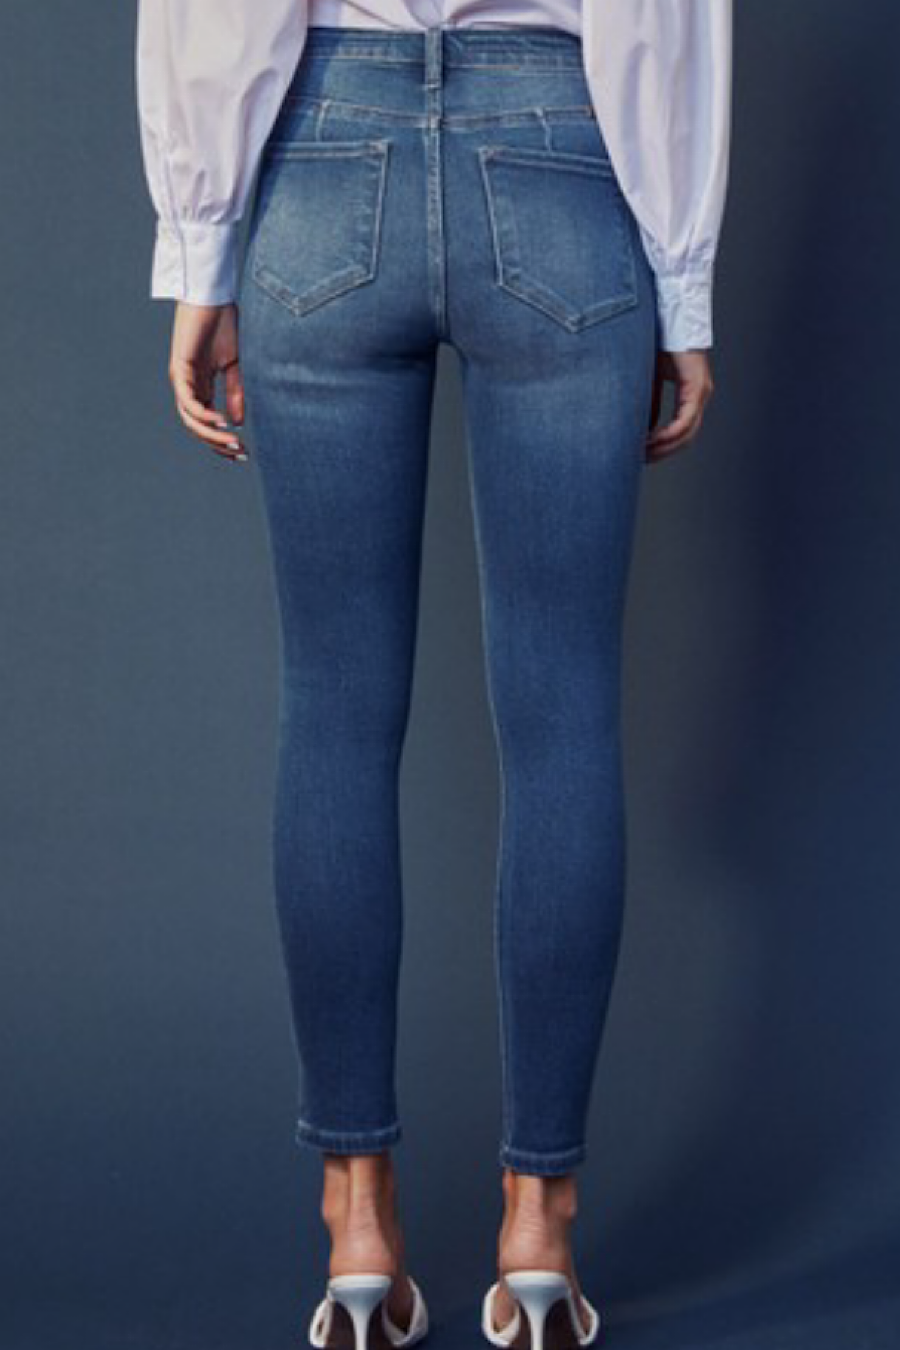 Beverly Hills Super Skinny Jeans